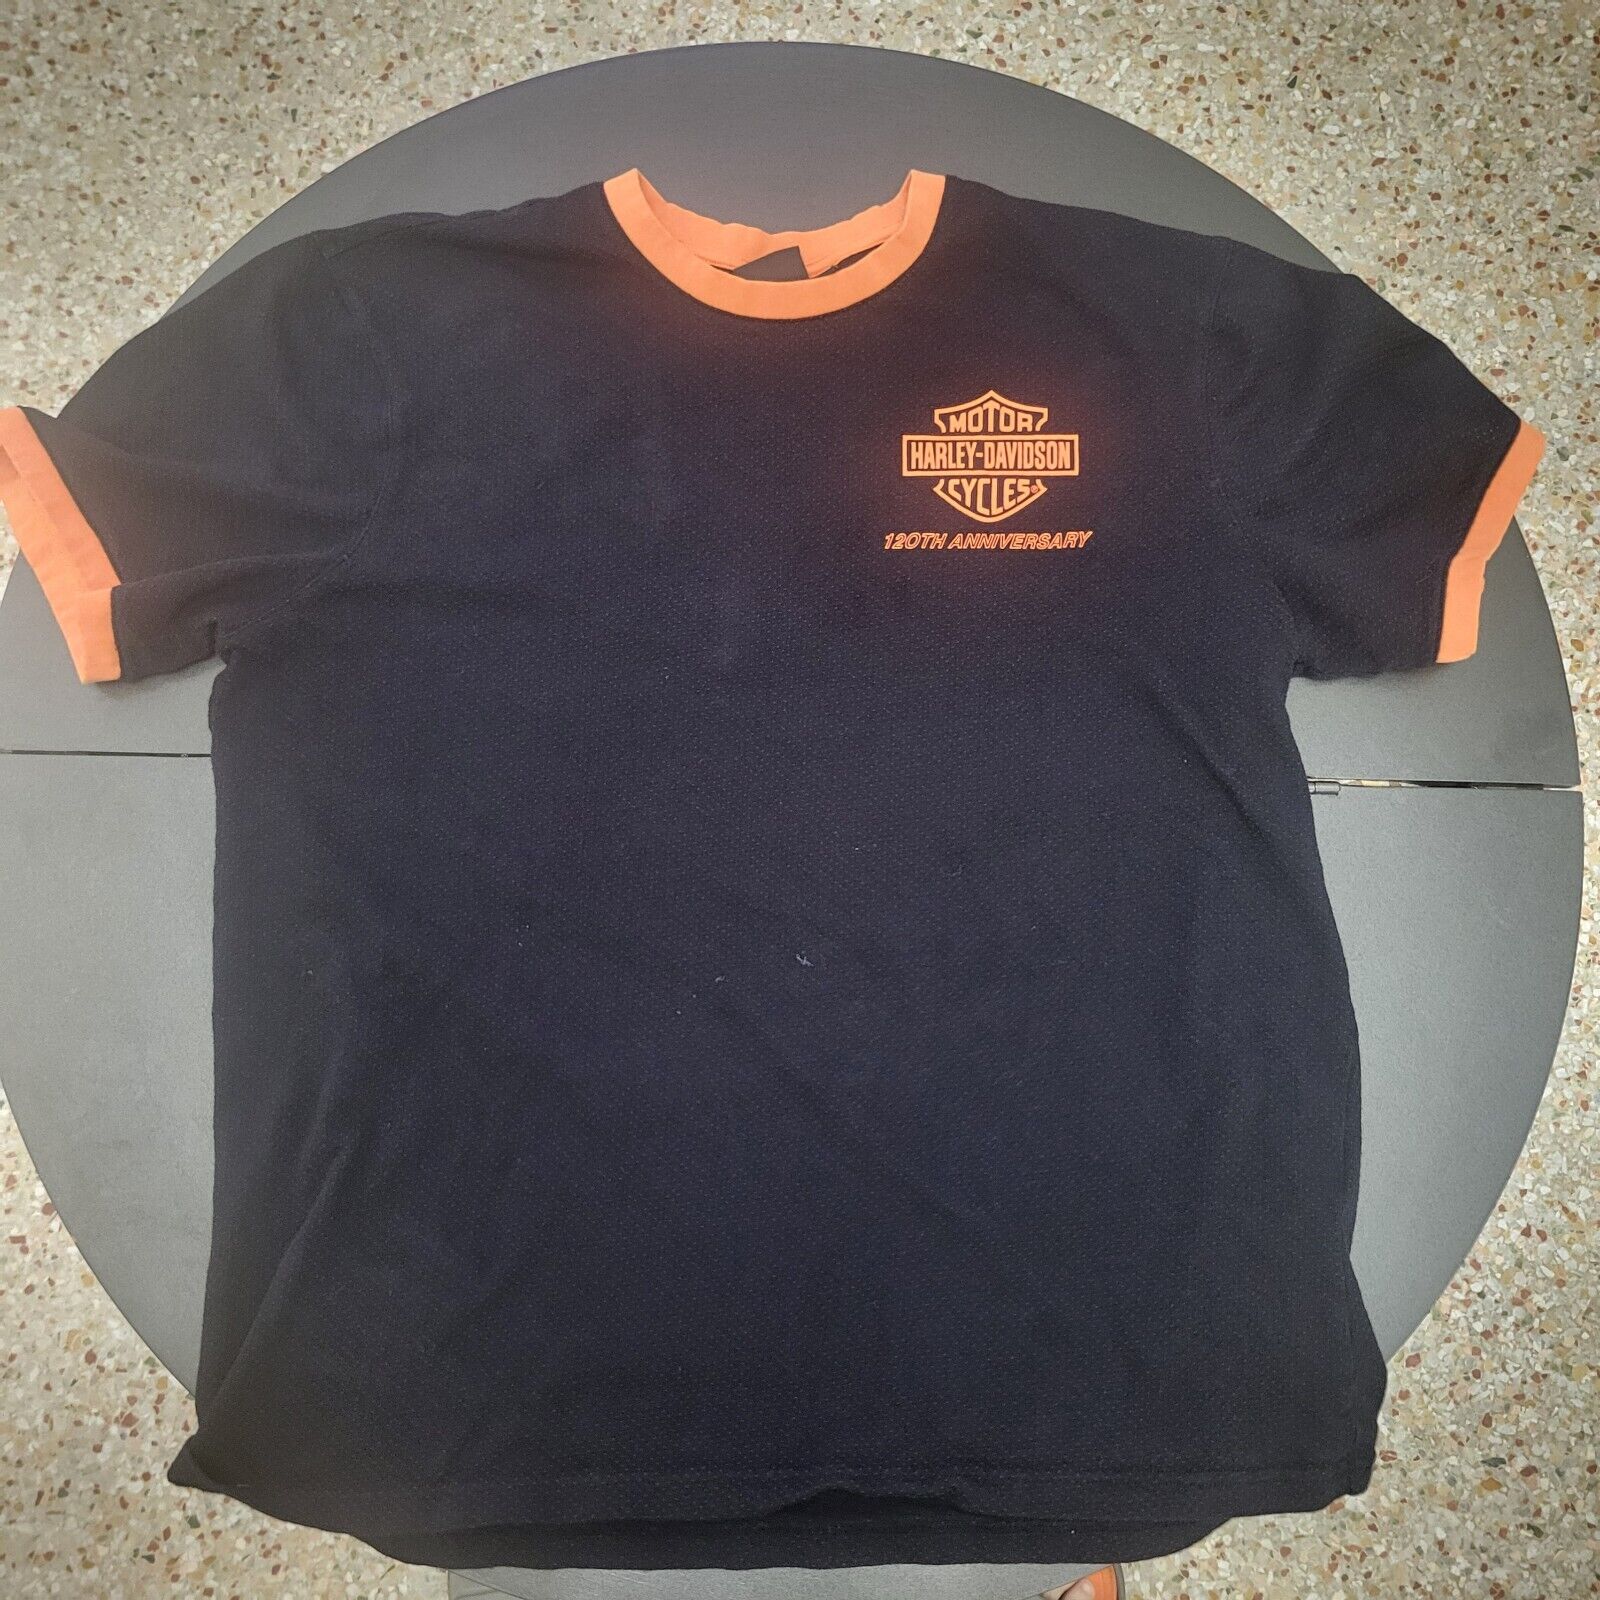 Harley Davidson Men's Size XL 110th Anniversary T-Shirt Black/orange